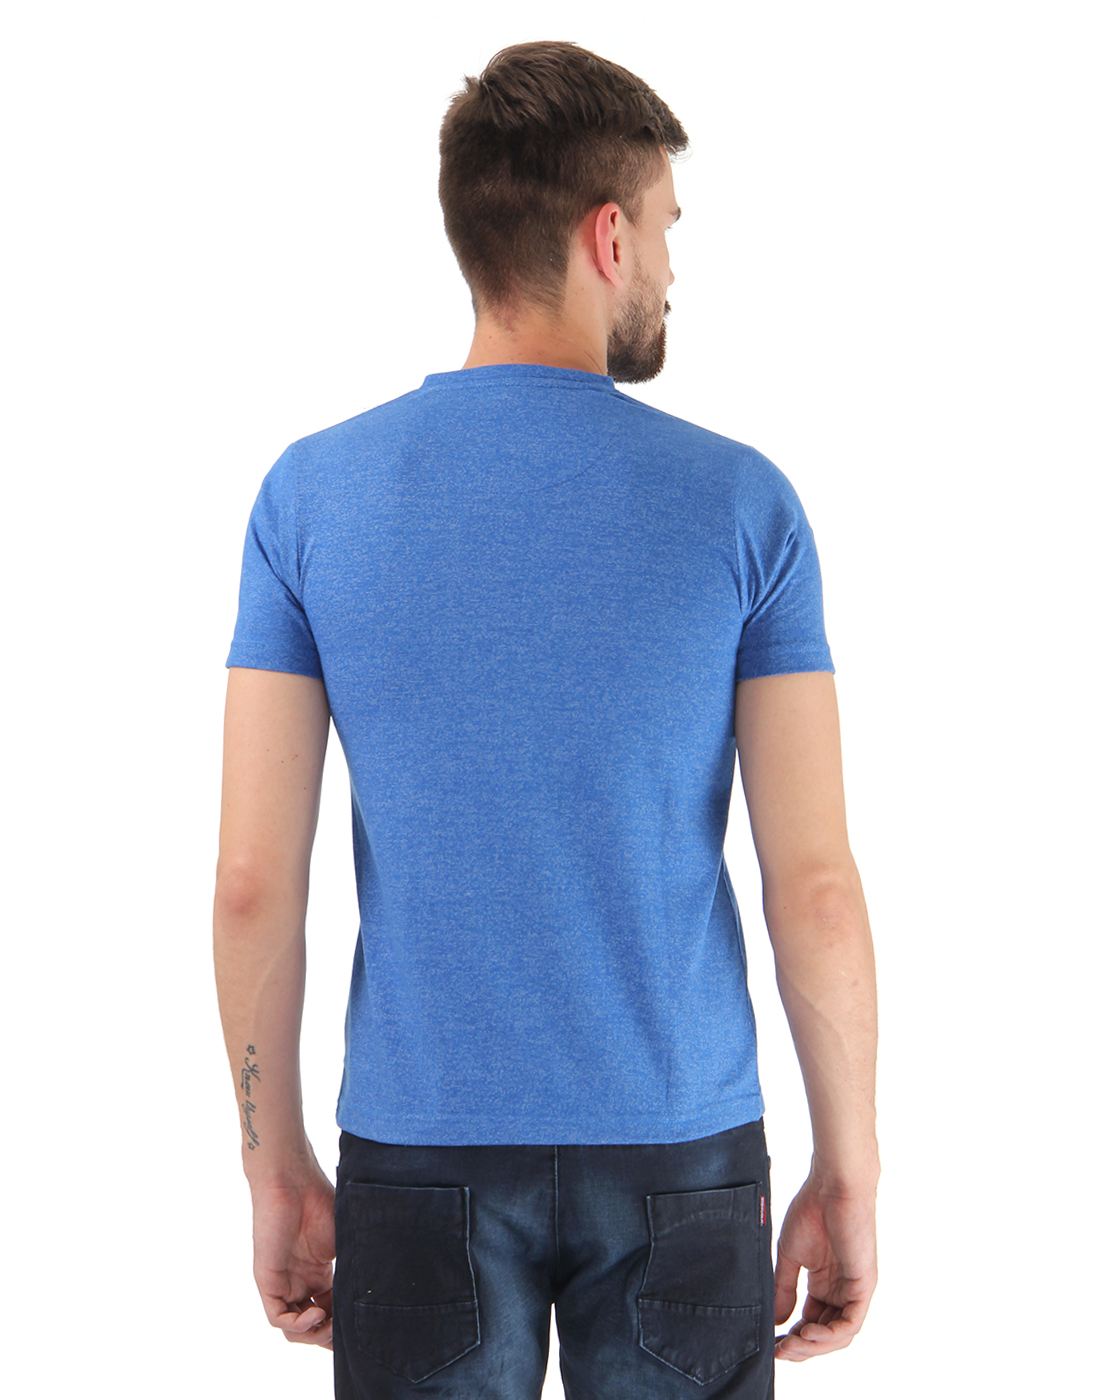 Cloak & Decker by Monte Carlo Men Blue T-Shirt